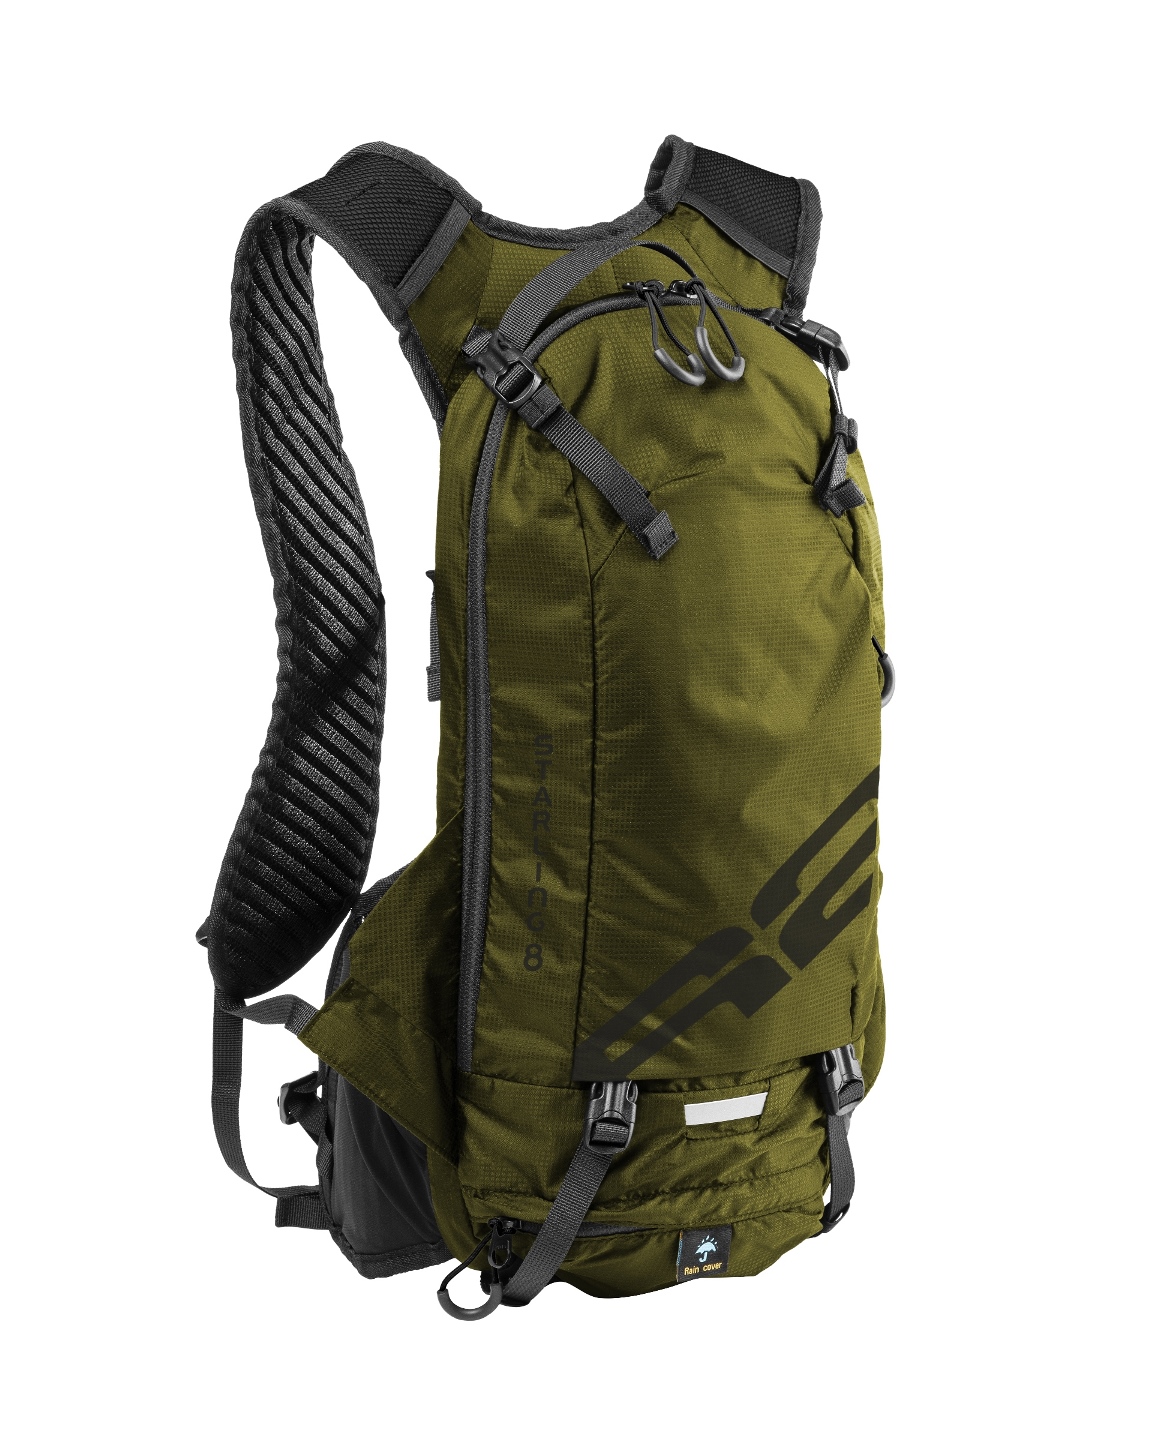 Sport backpack  R2 STARLING ATBP03C 8L